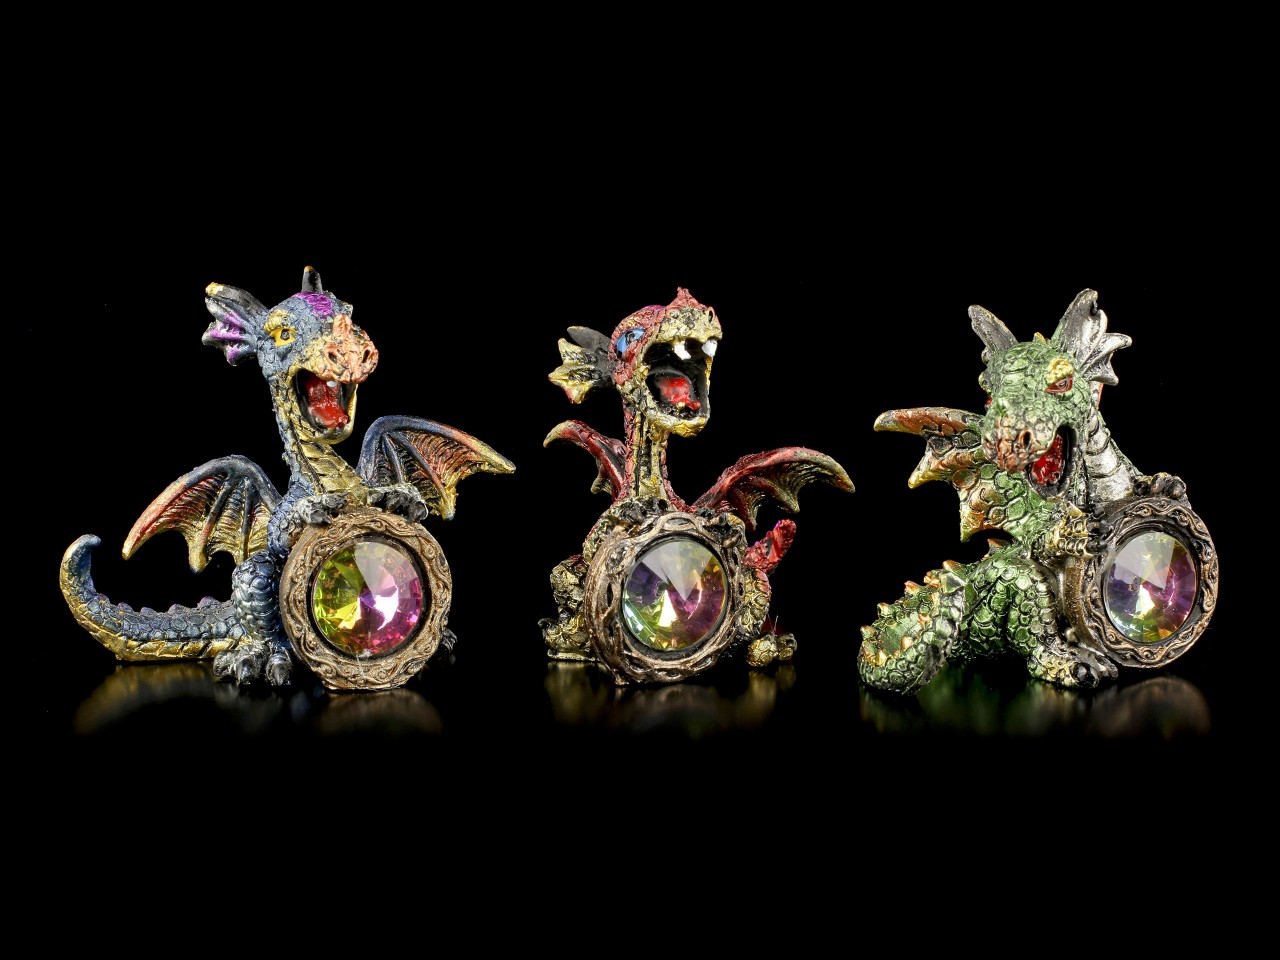 Dragon Figurines Set of 3 - Diamond Fever